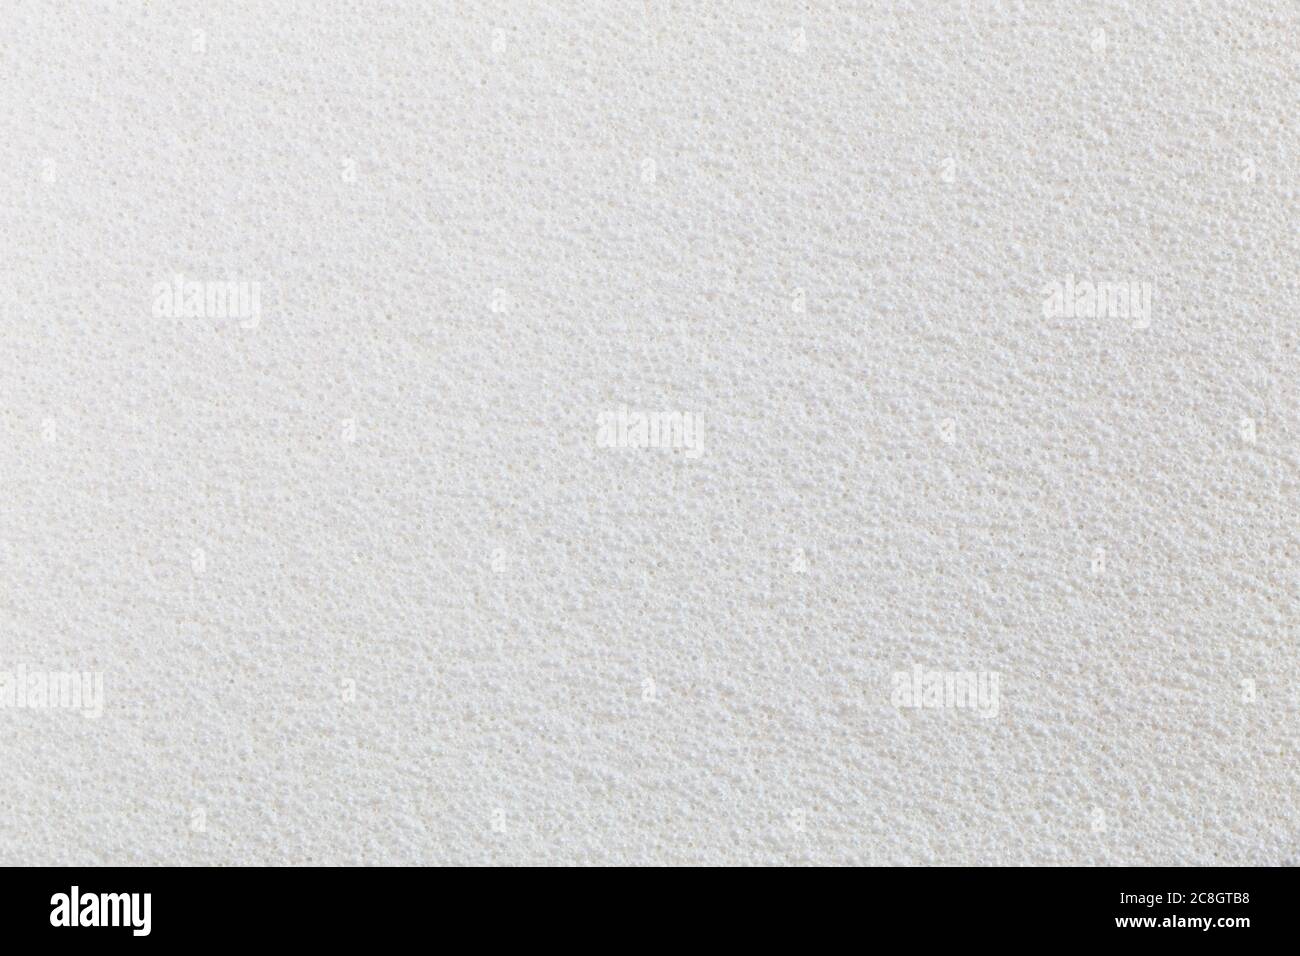 https://c8.alamy.com/comp/2C8GTB8/flat-white-plastic-foam-texture-and-background-2C8GTB8.jpg